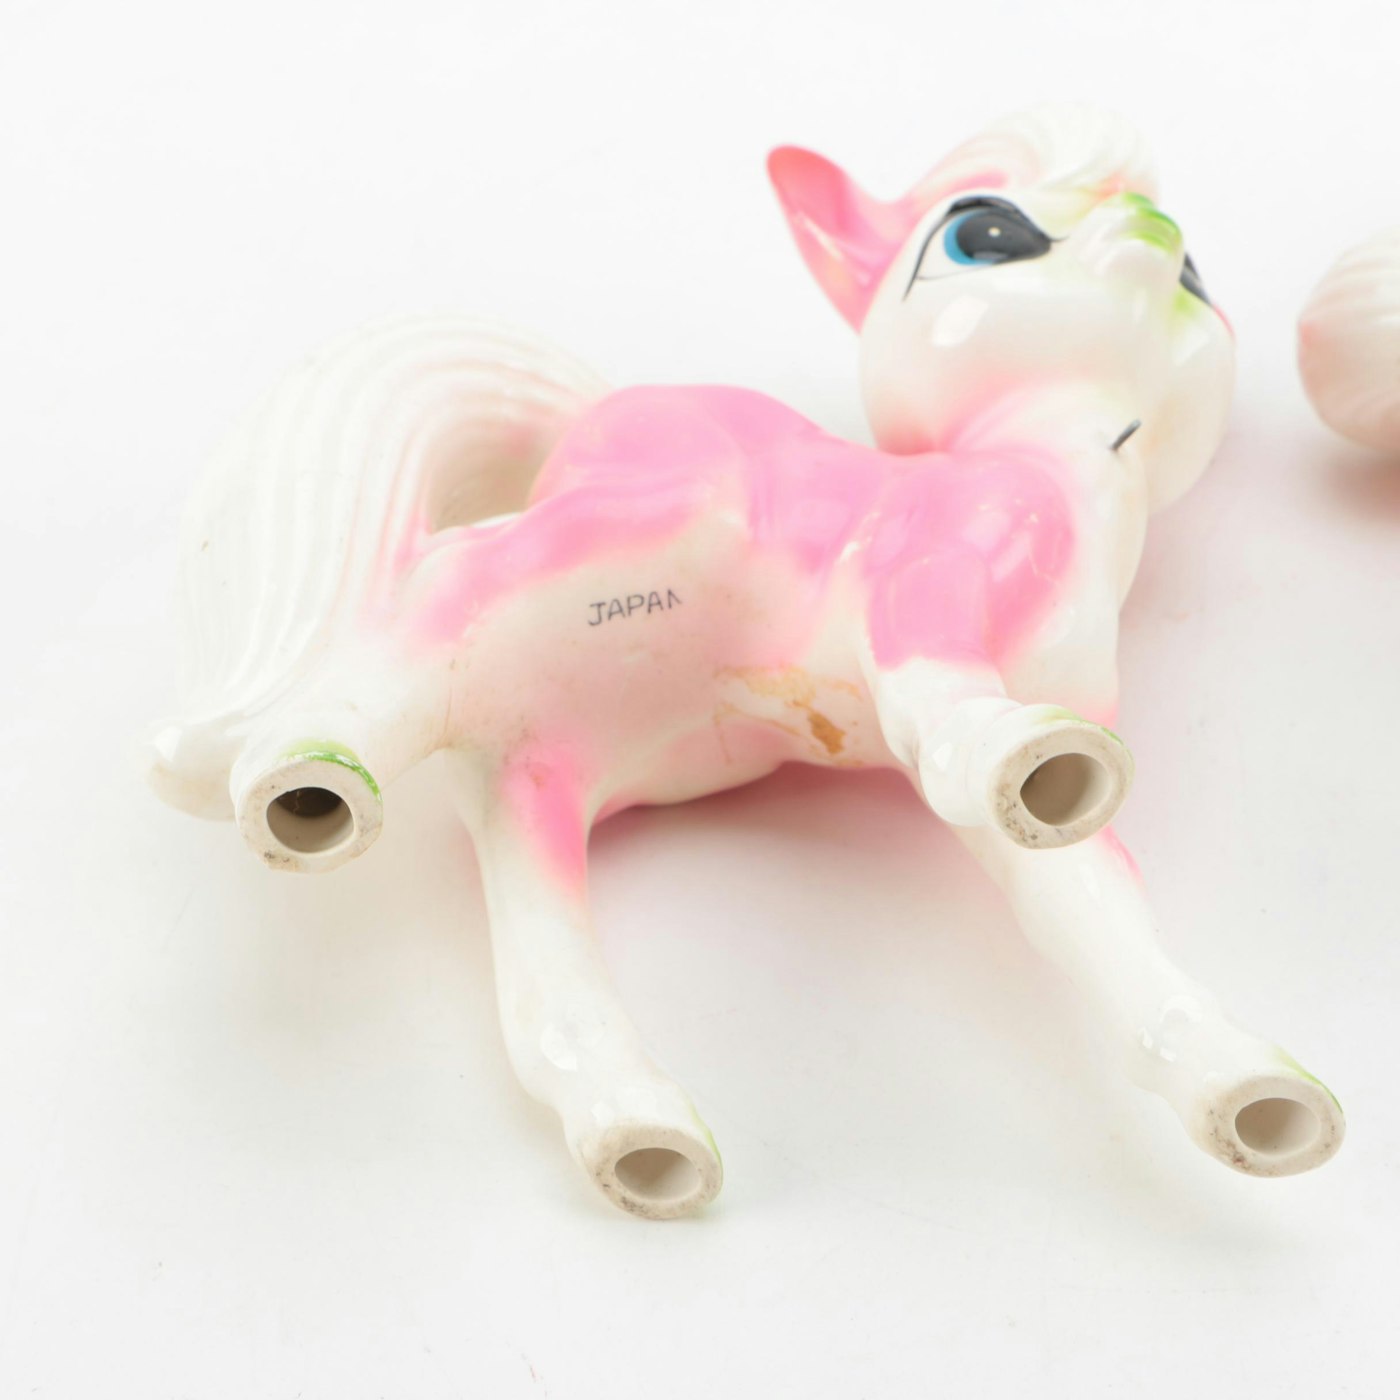 Vintage Japanese Pink and White Porcelain Animal Figurines | EBTH